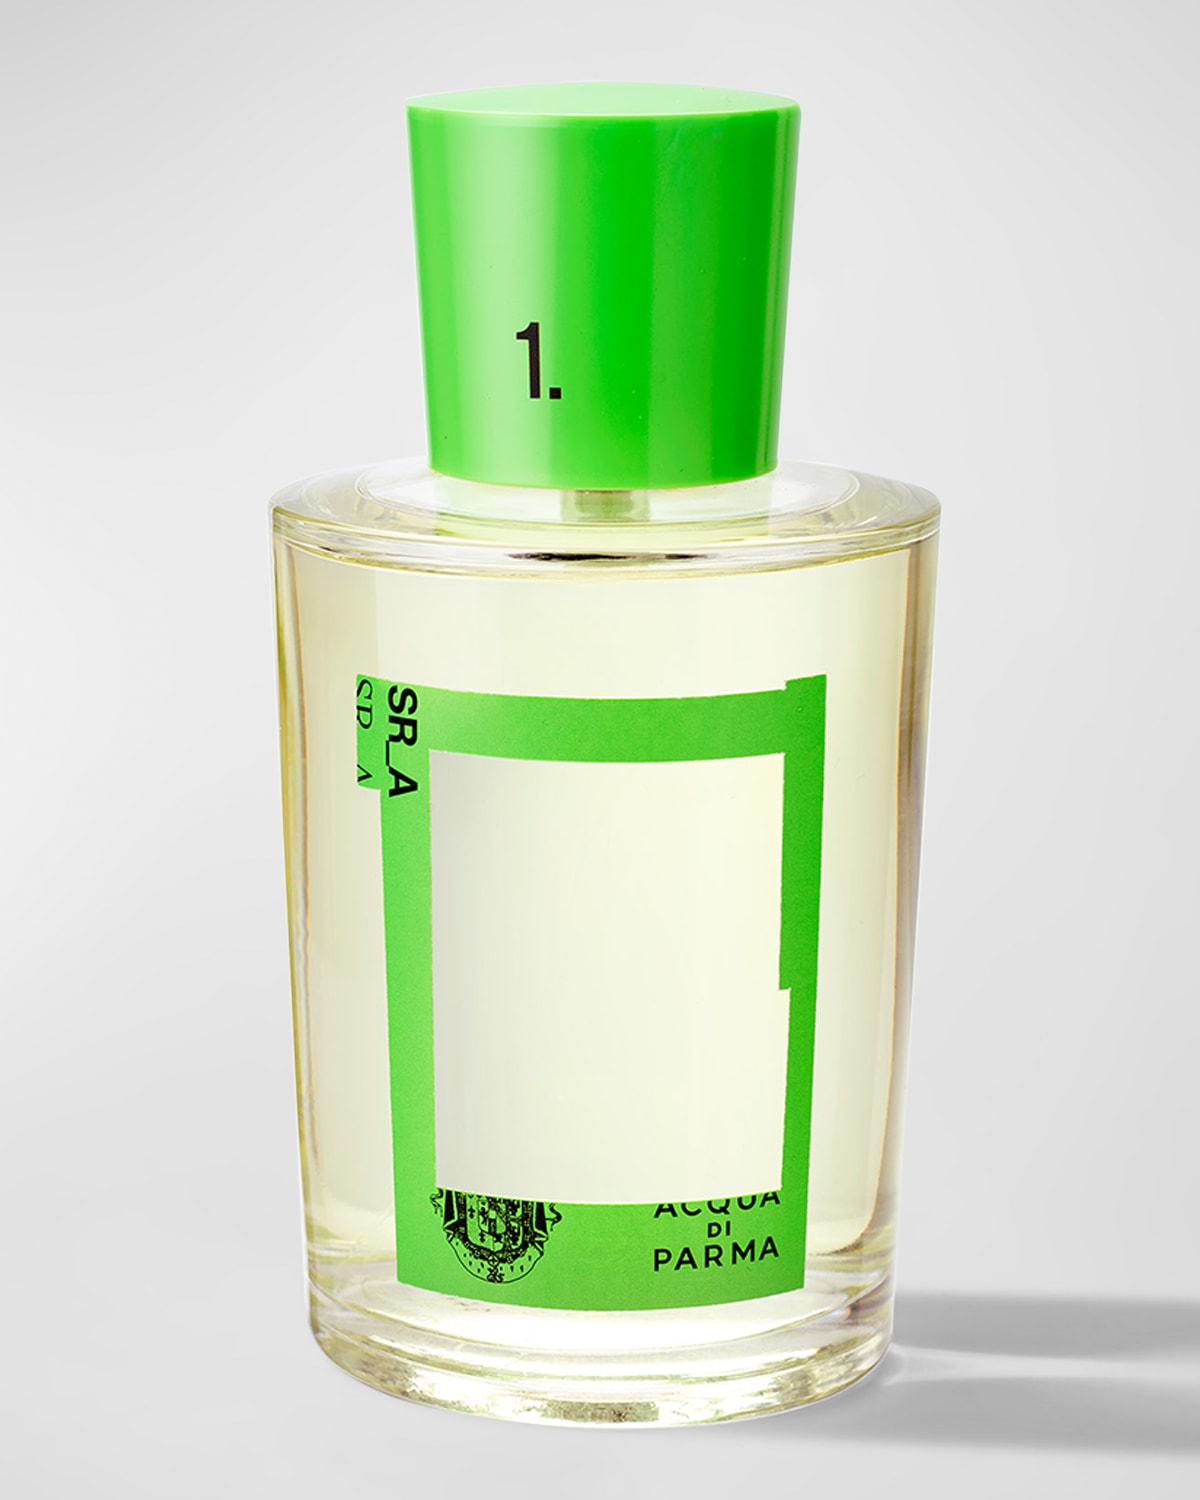 Acqua di Parma x Samuel Ross Colonia Eau de Cologne, 3.4 oz. - Green